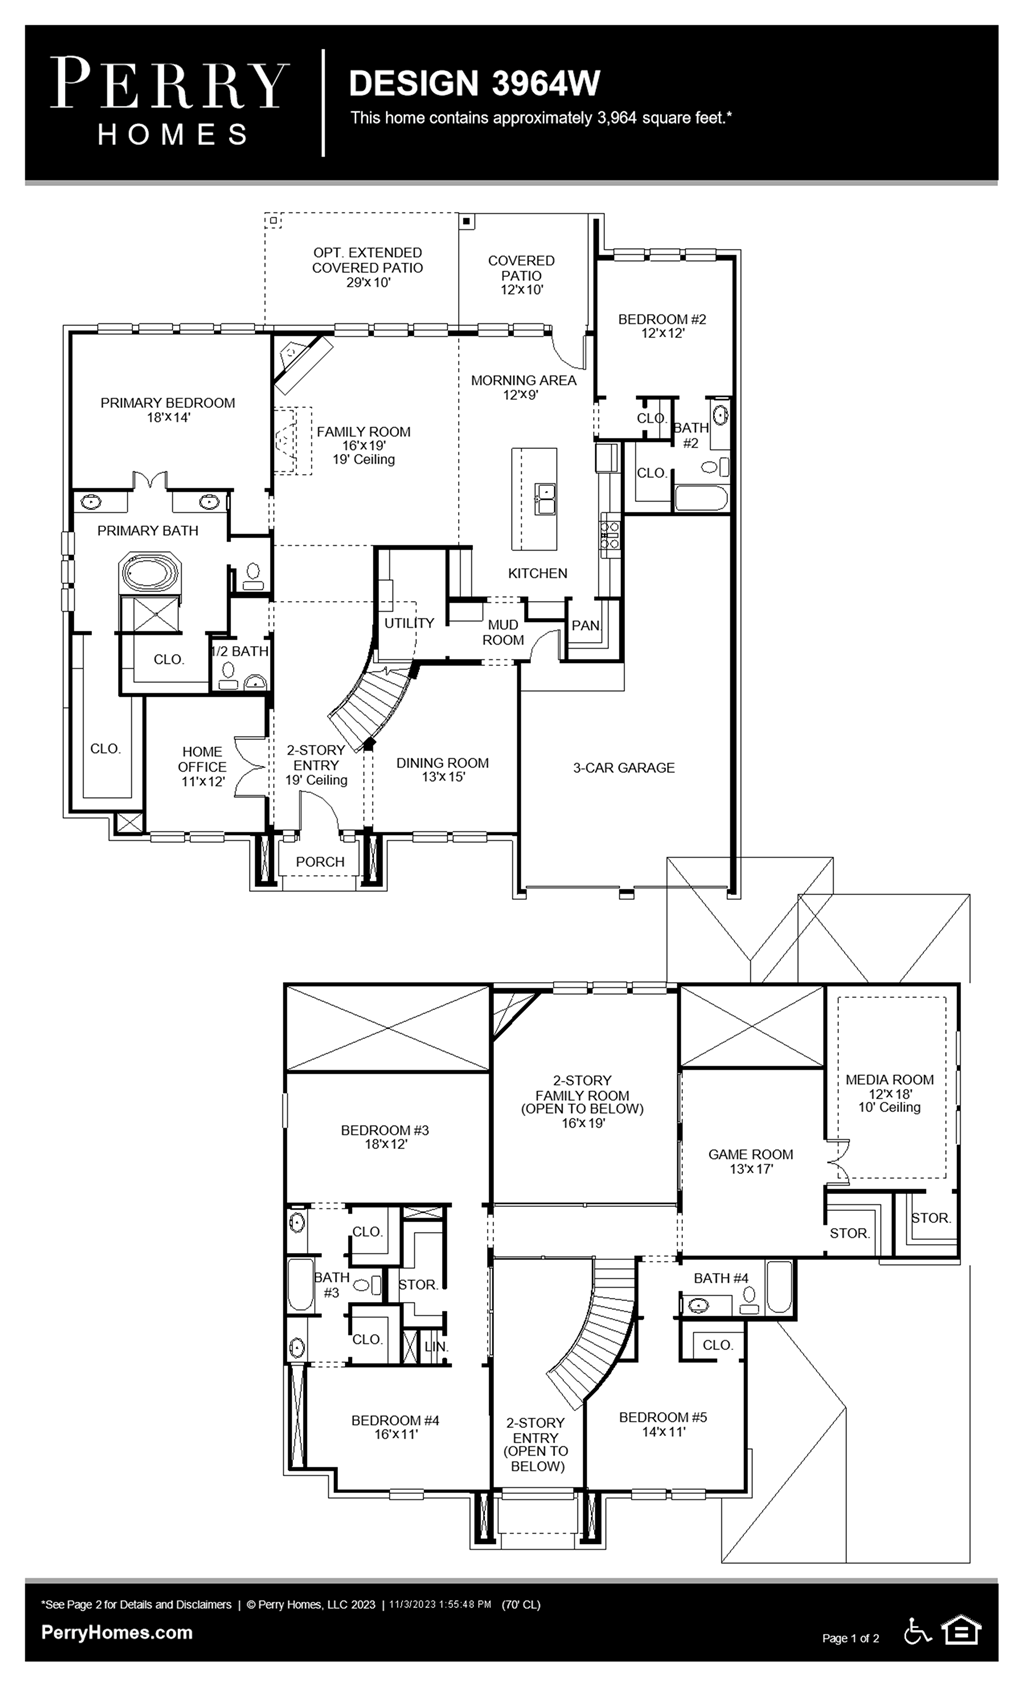 Floor Plan for 3964W